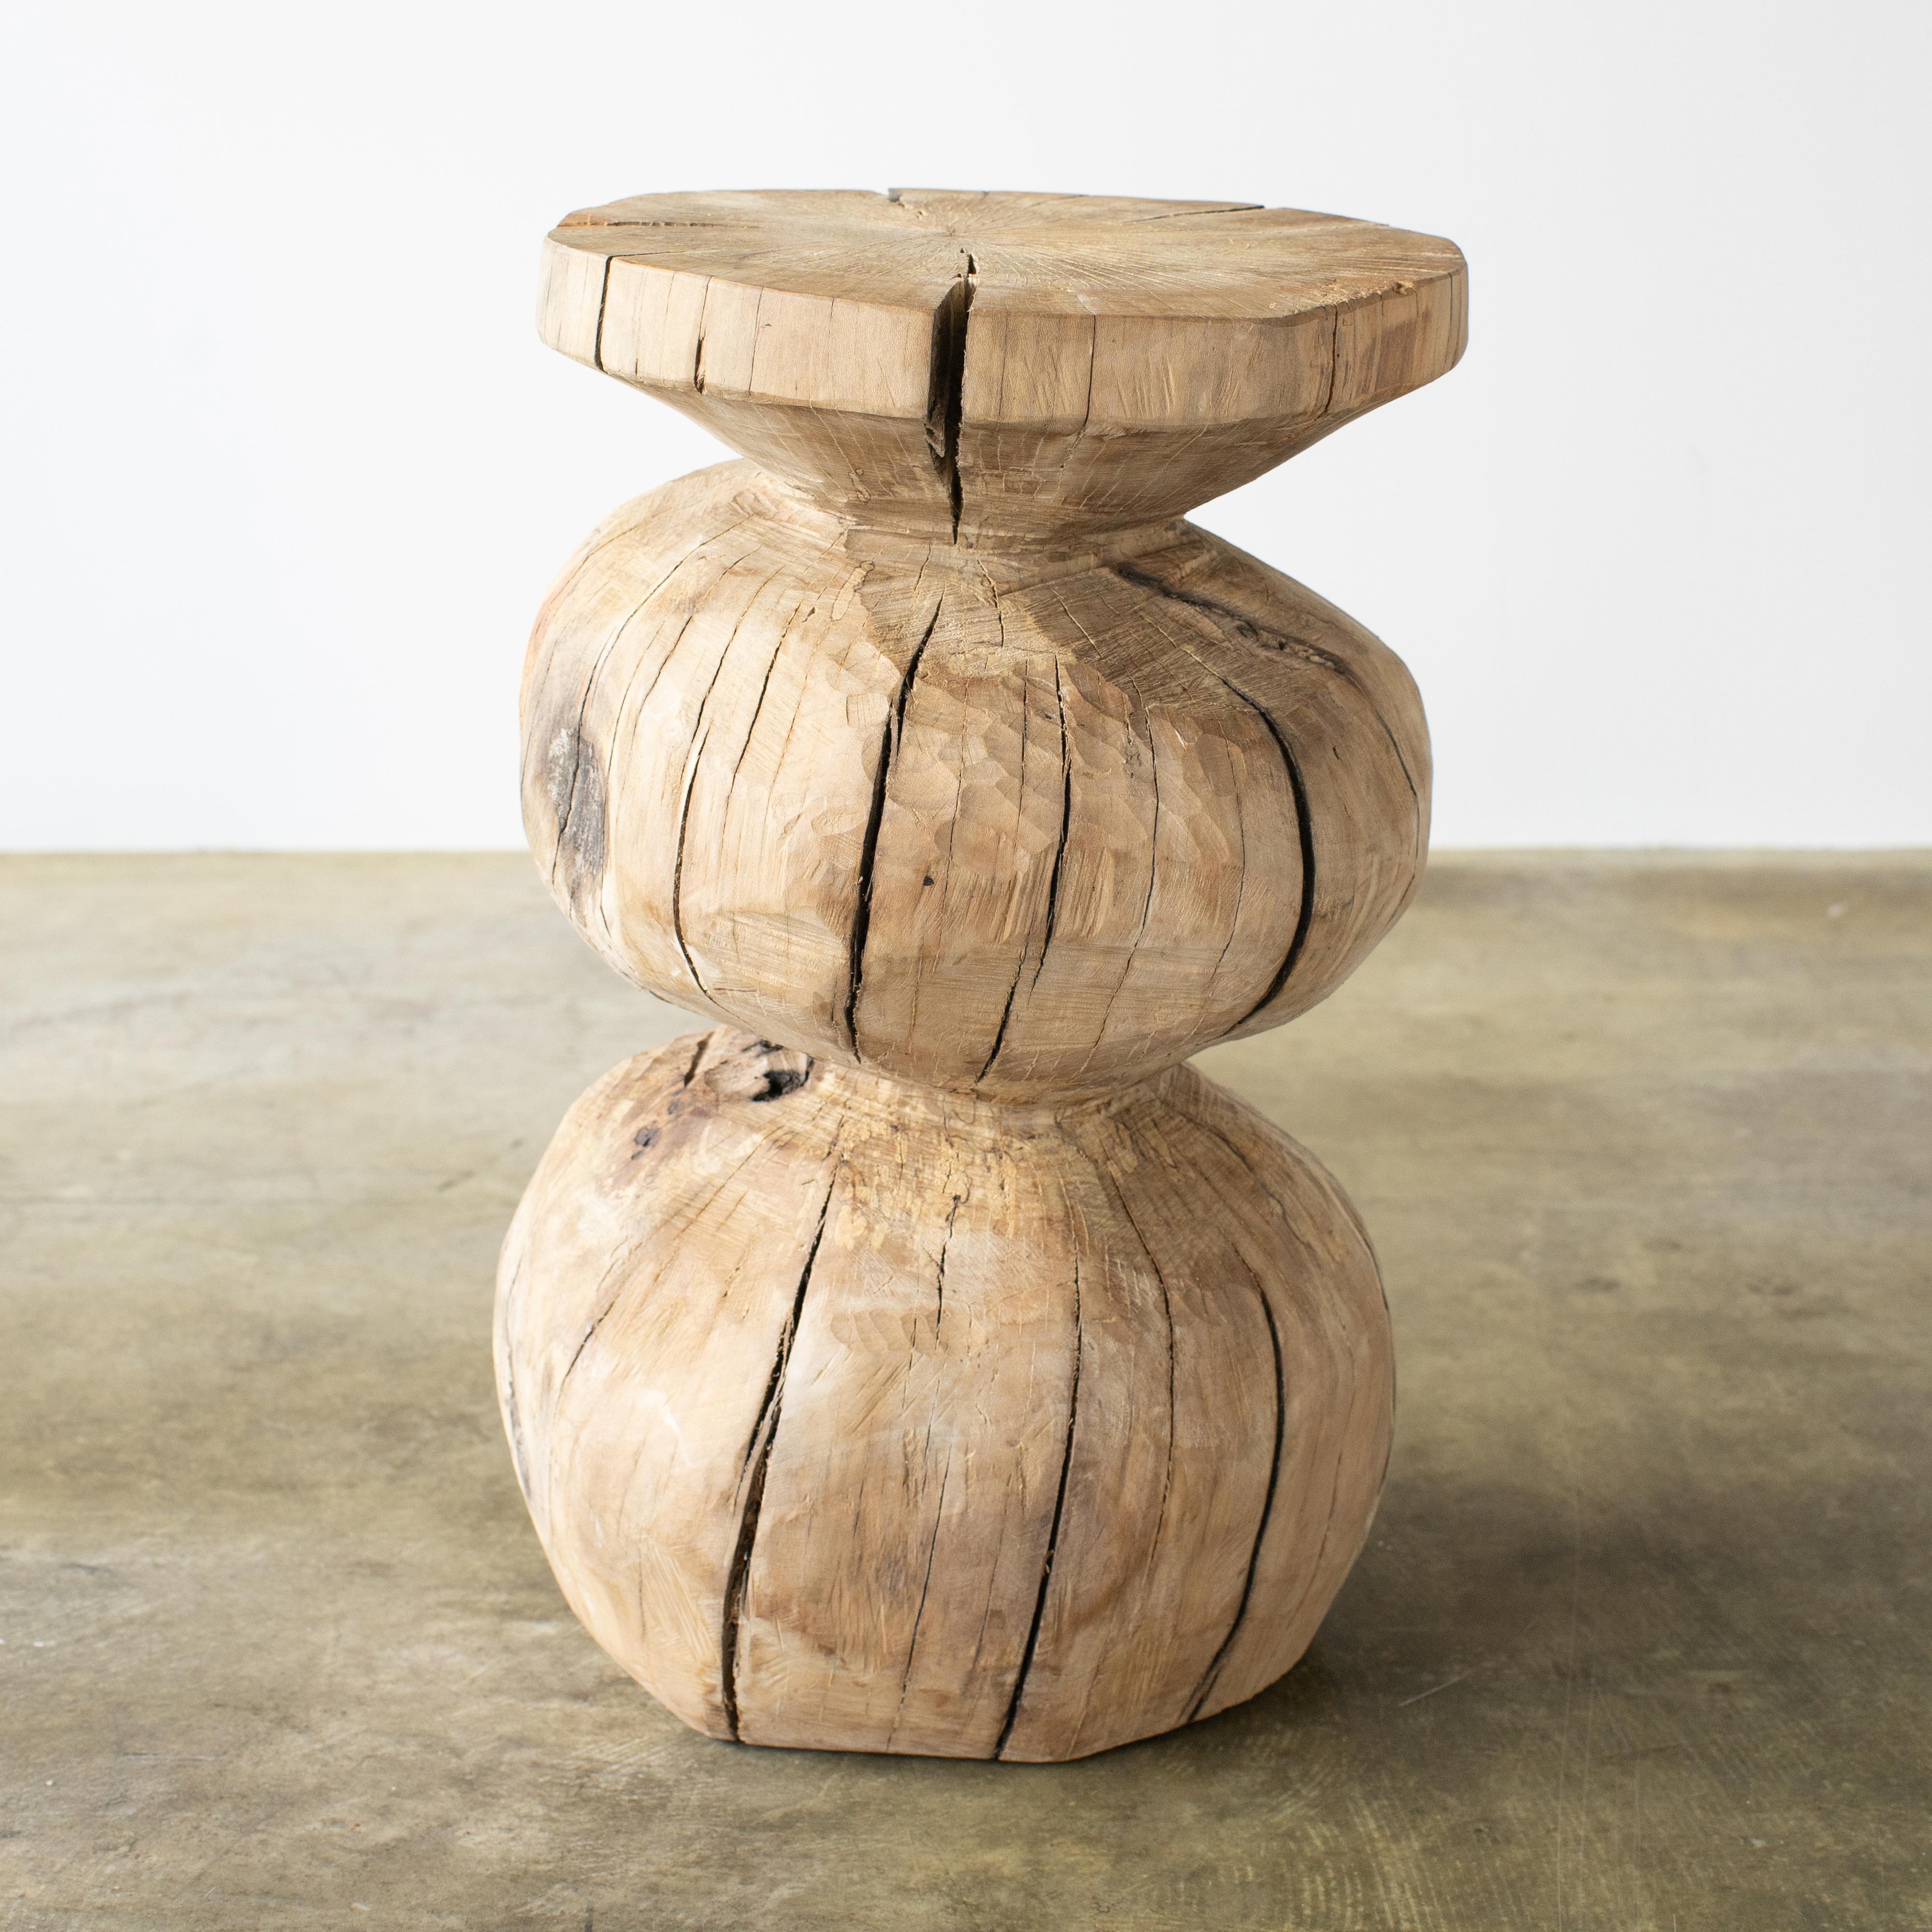 Hand-Carved Hiroyuki Nishimura Furniture Sculptural Wood Stool 10-12 Tribal Glamping